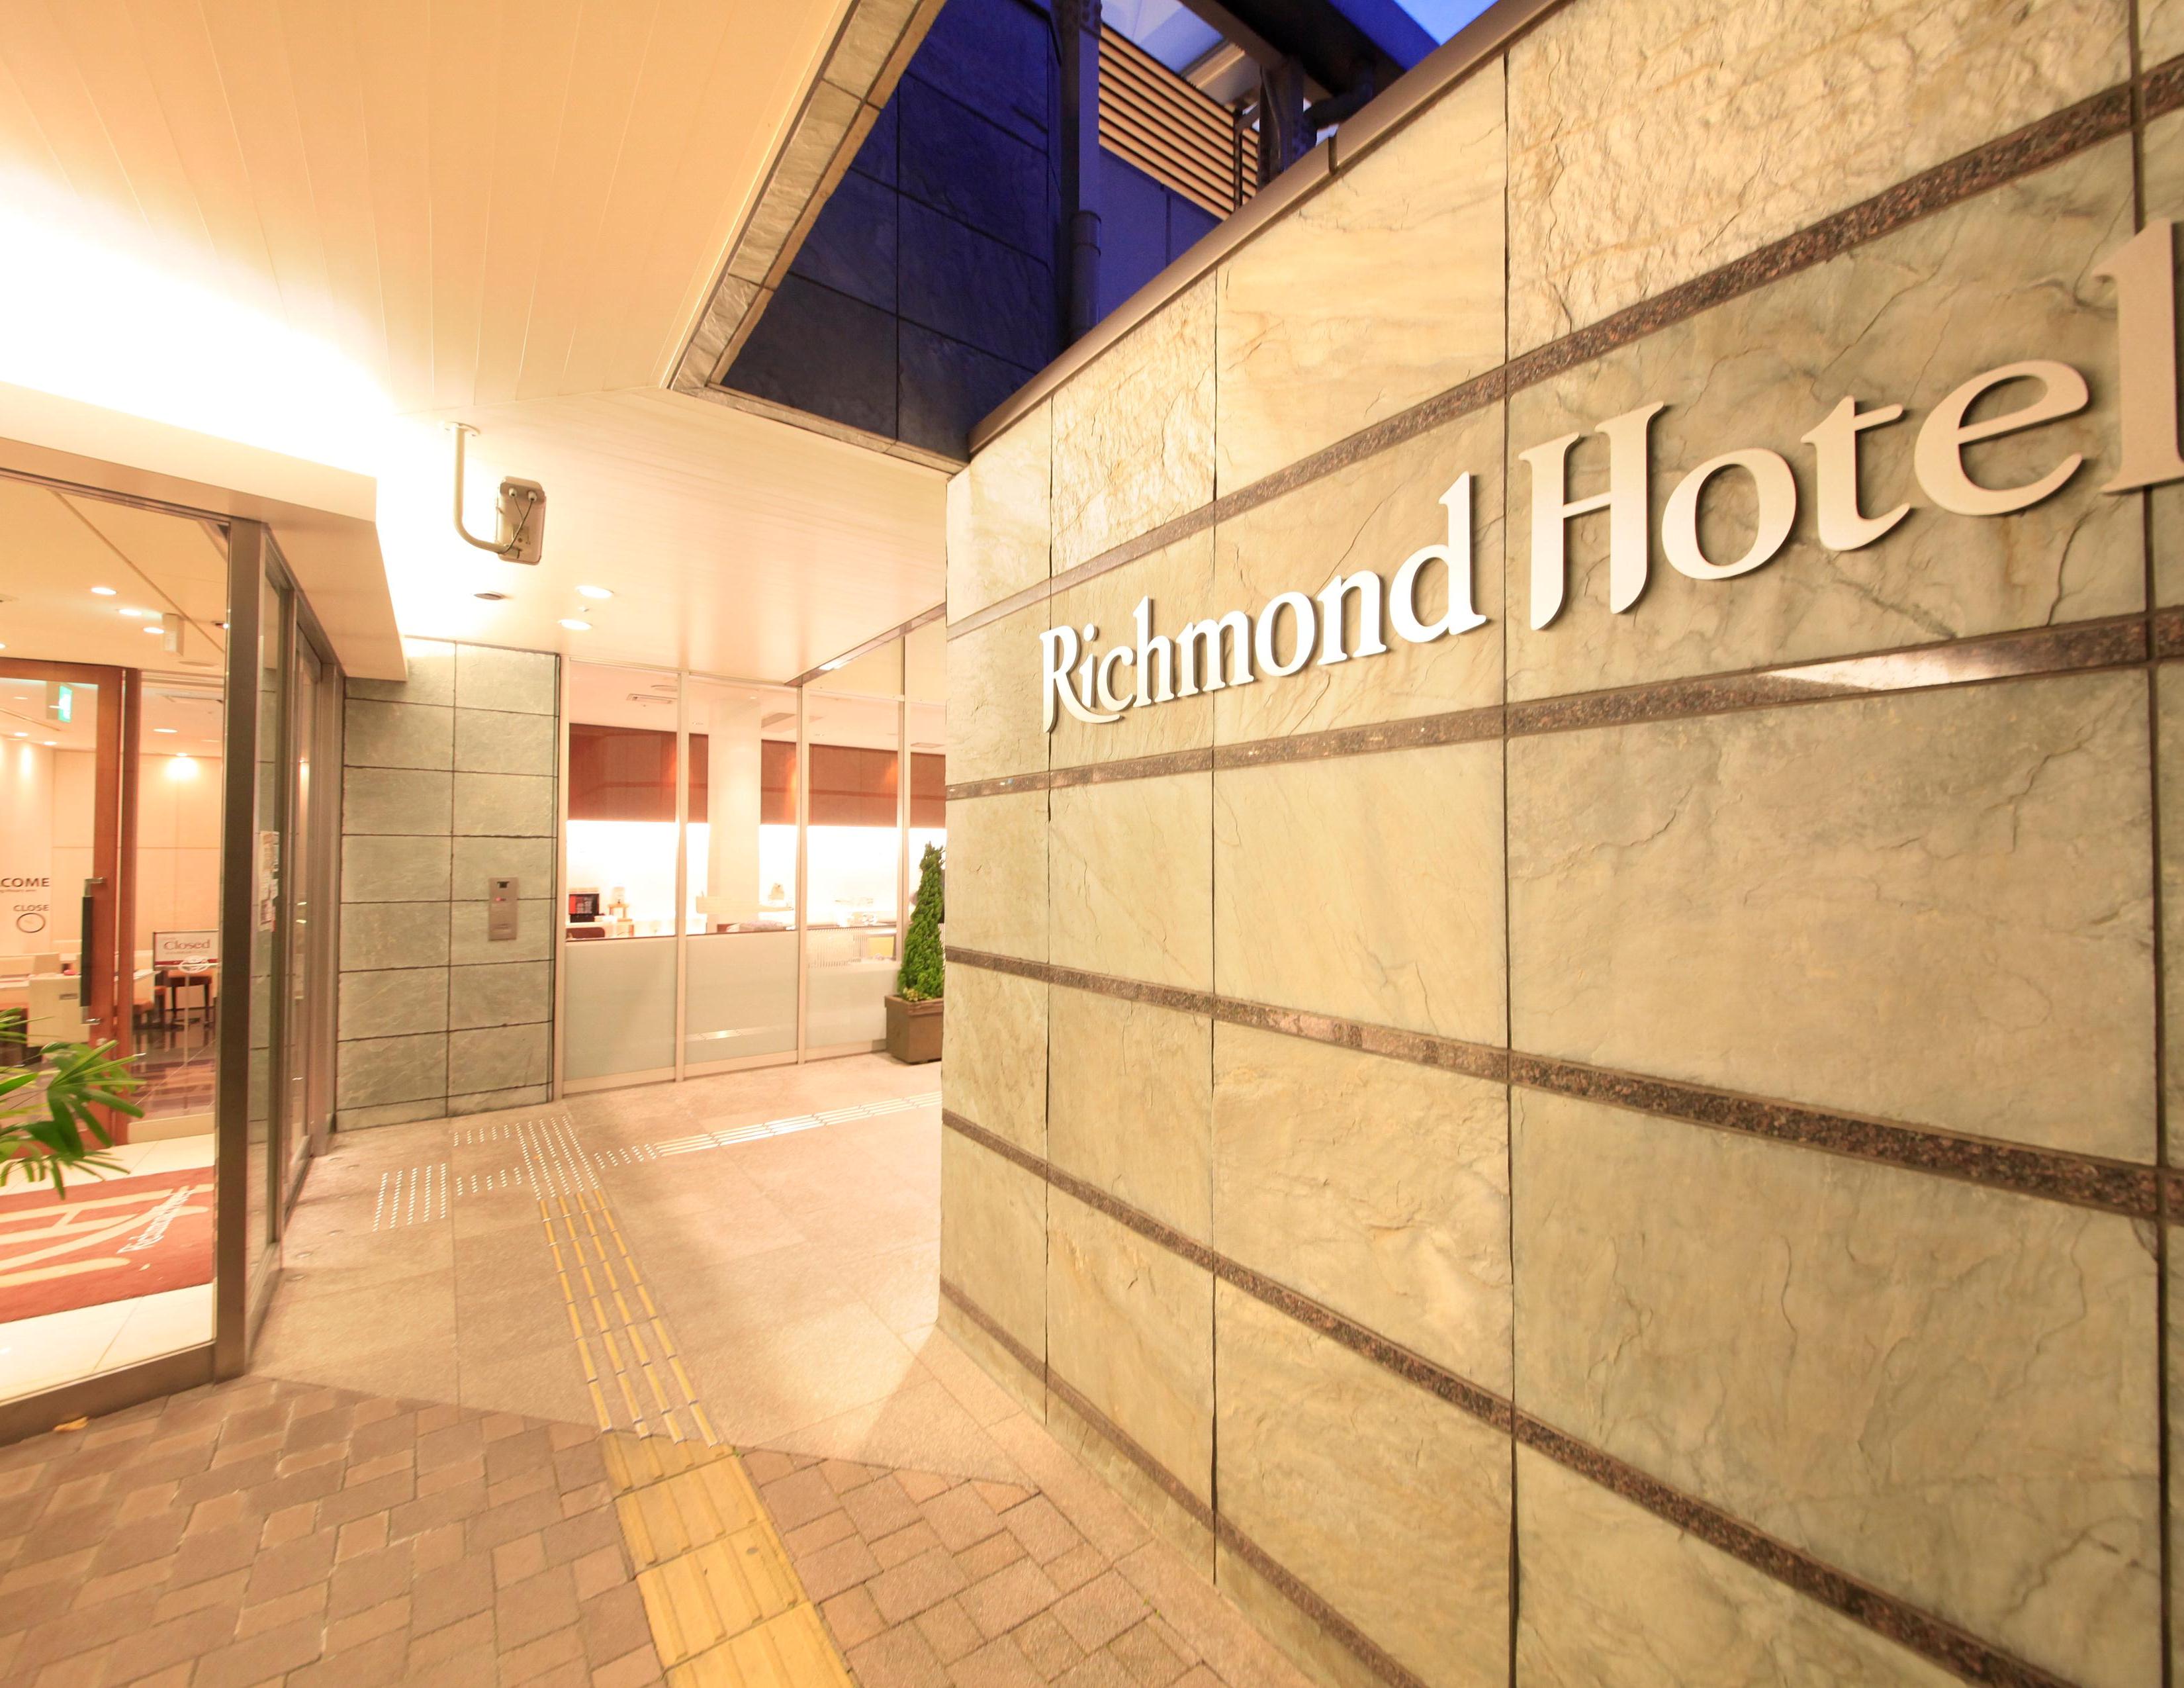 Richmond Hotel Kochi